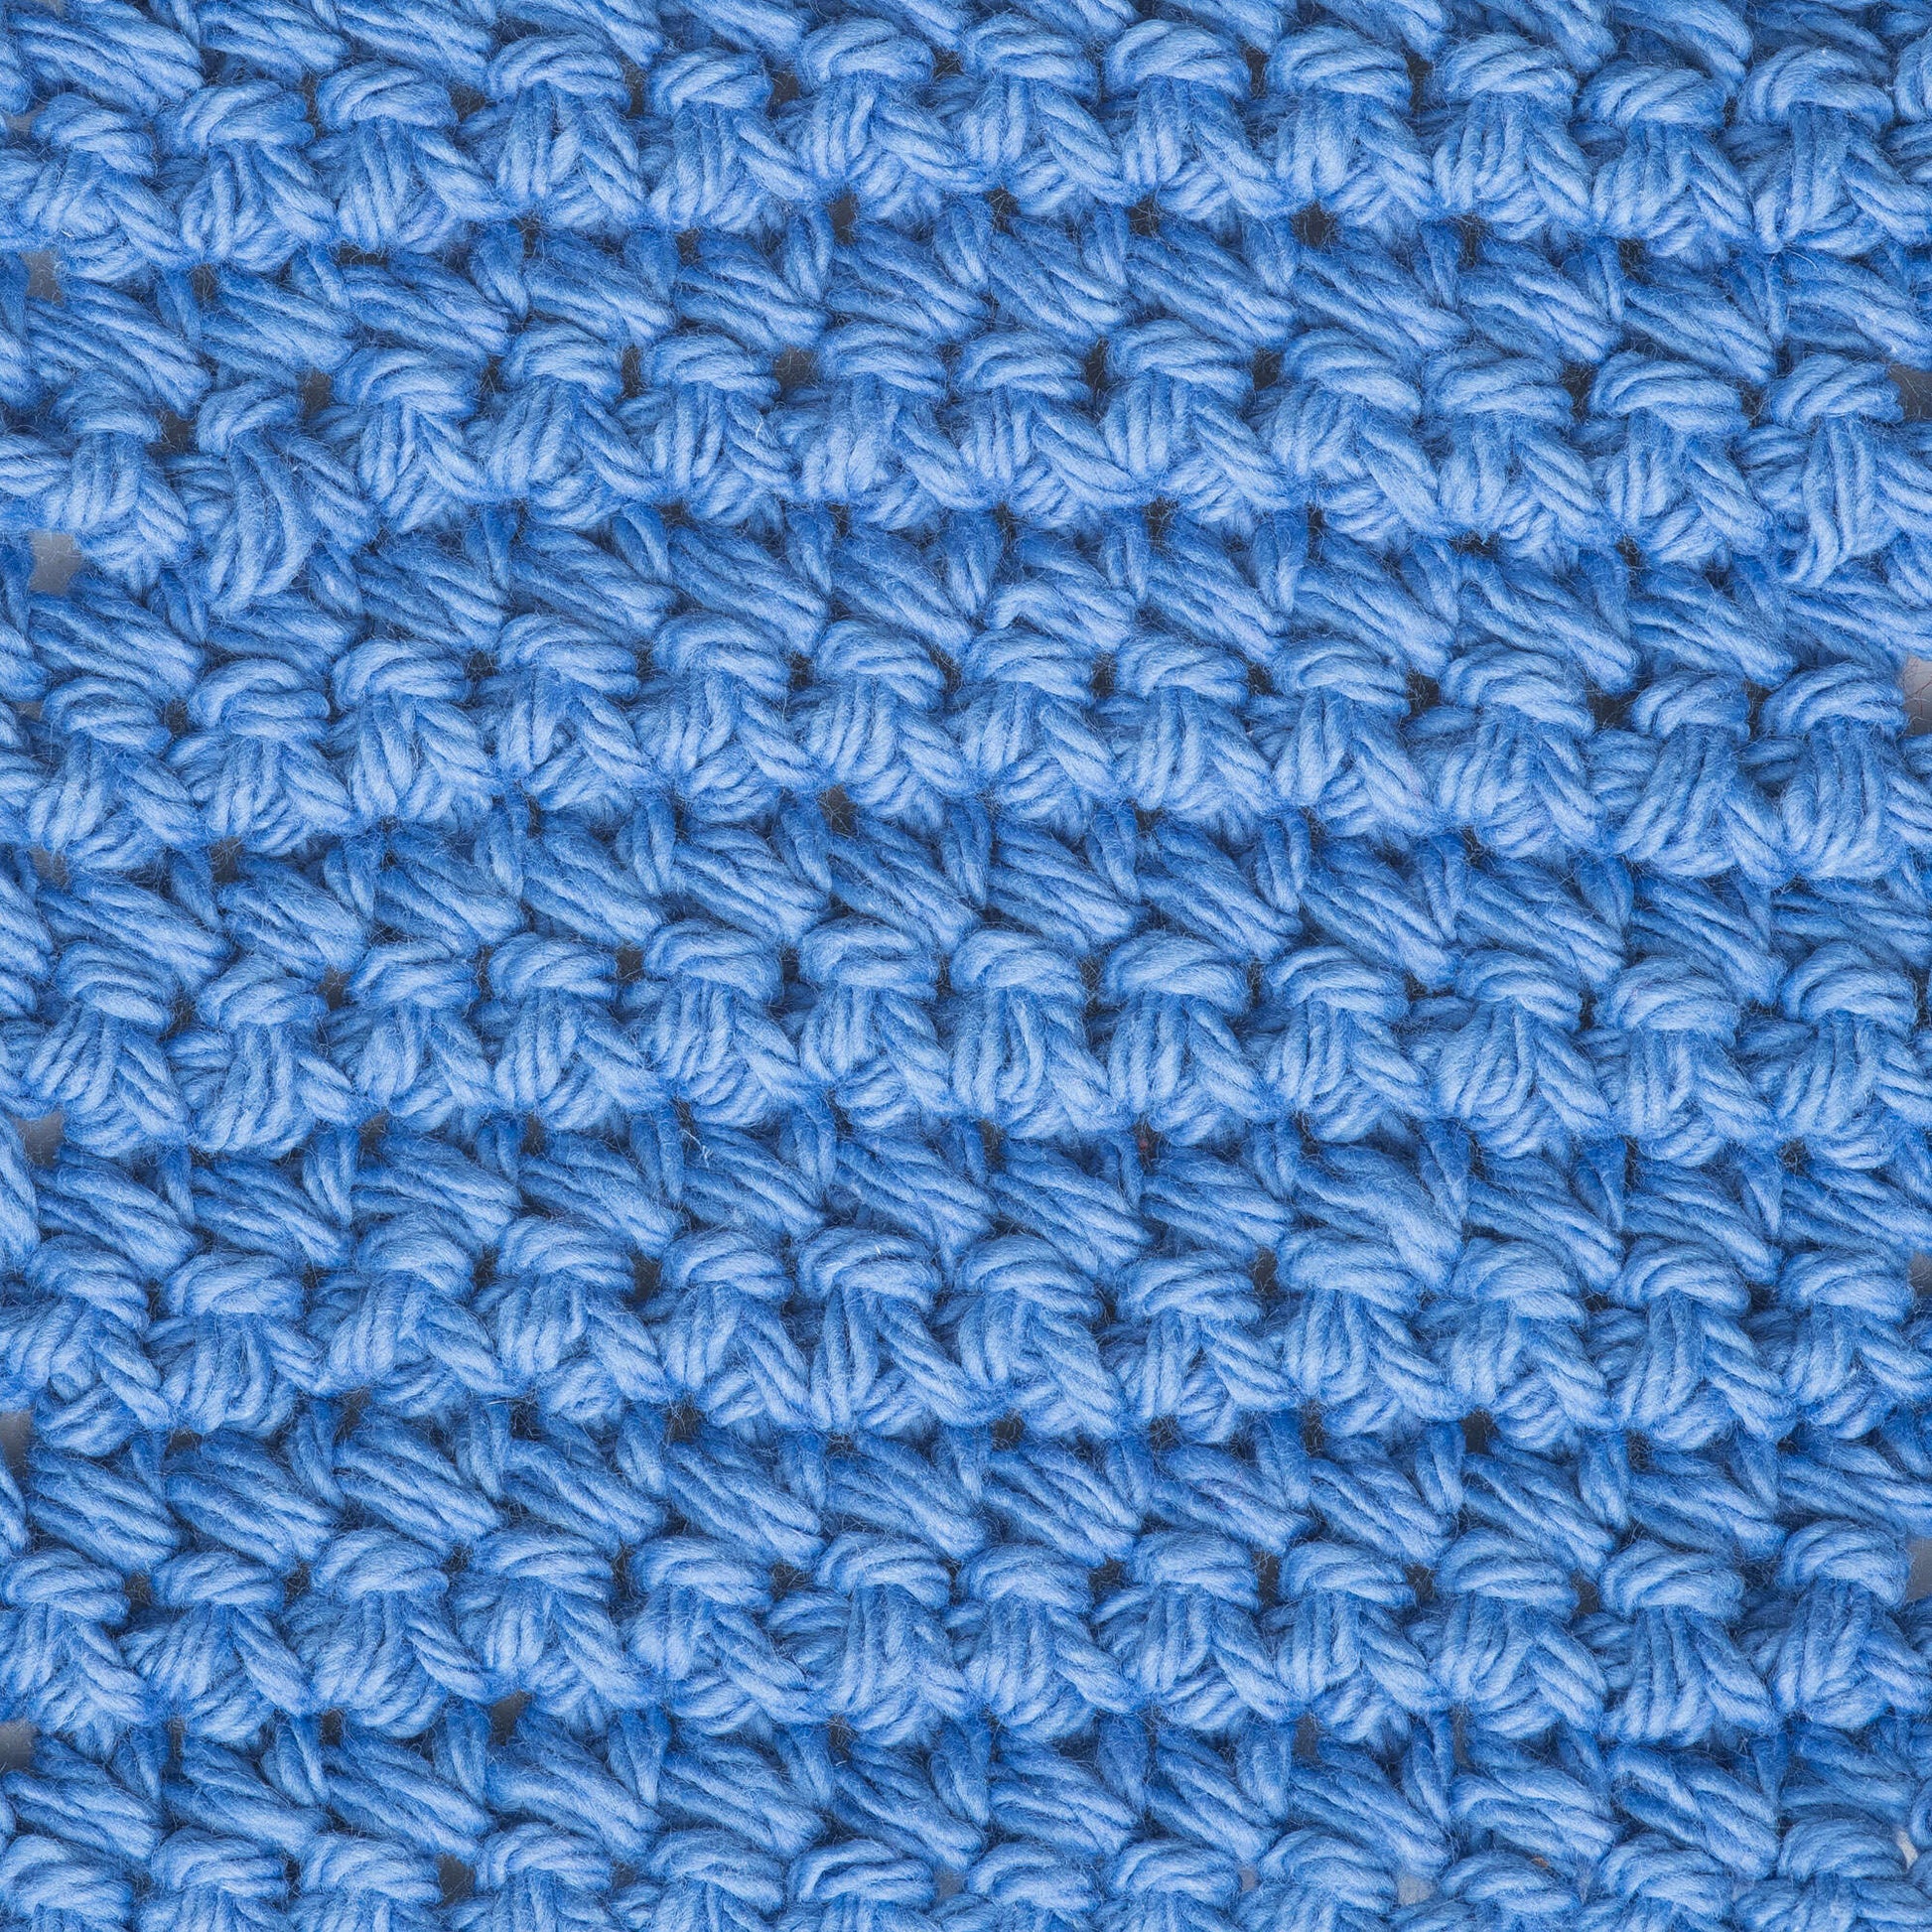 (Pack of 3) Bernat Handicrafter Cotton Yarn - Solids-Warm Brown